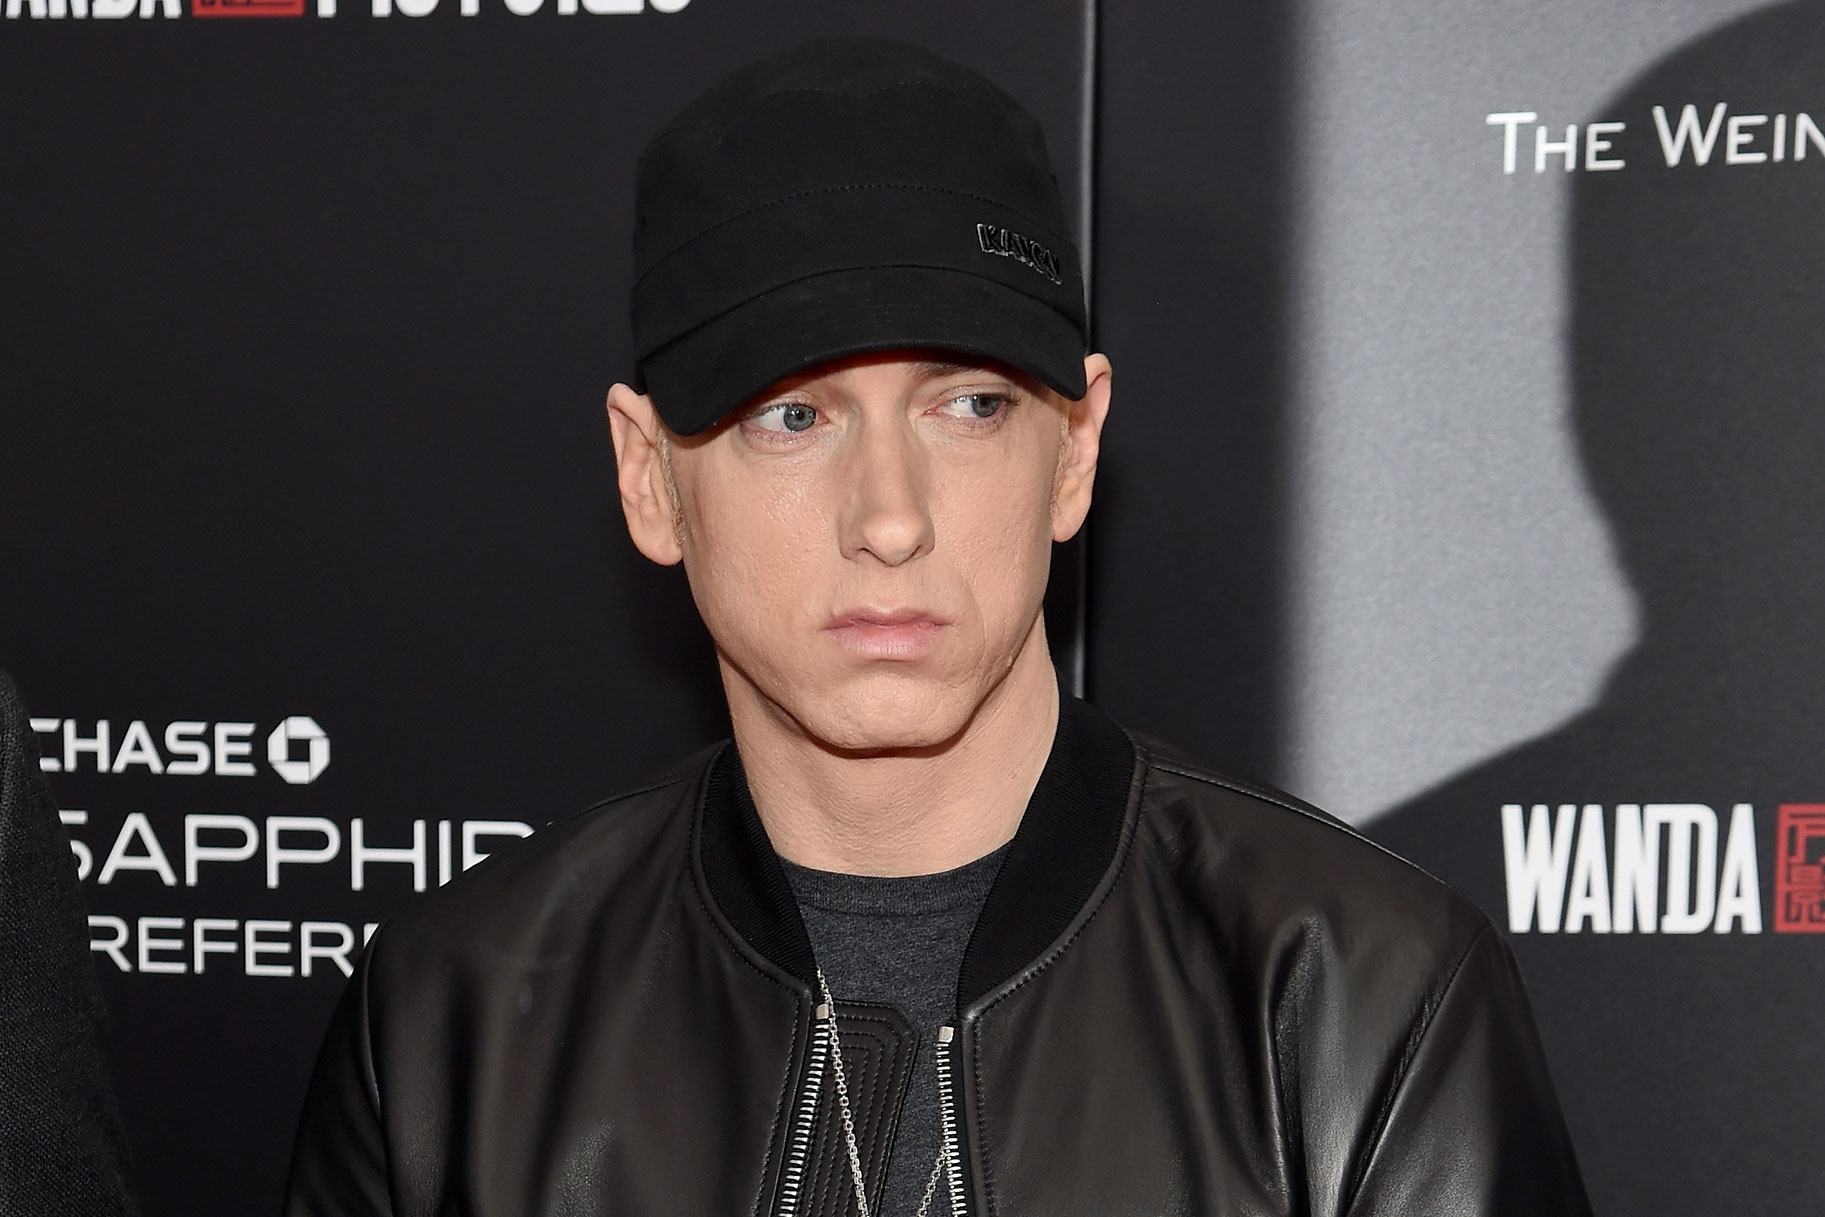 Eminem G